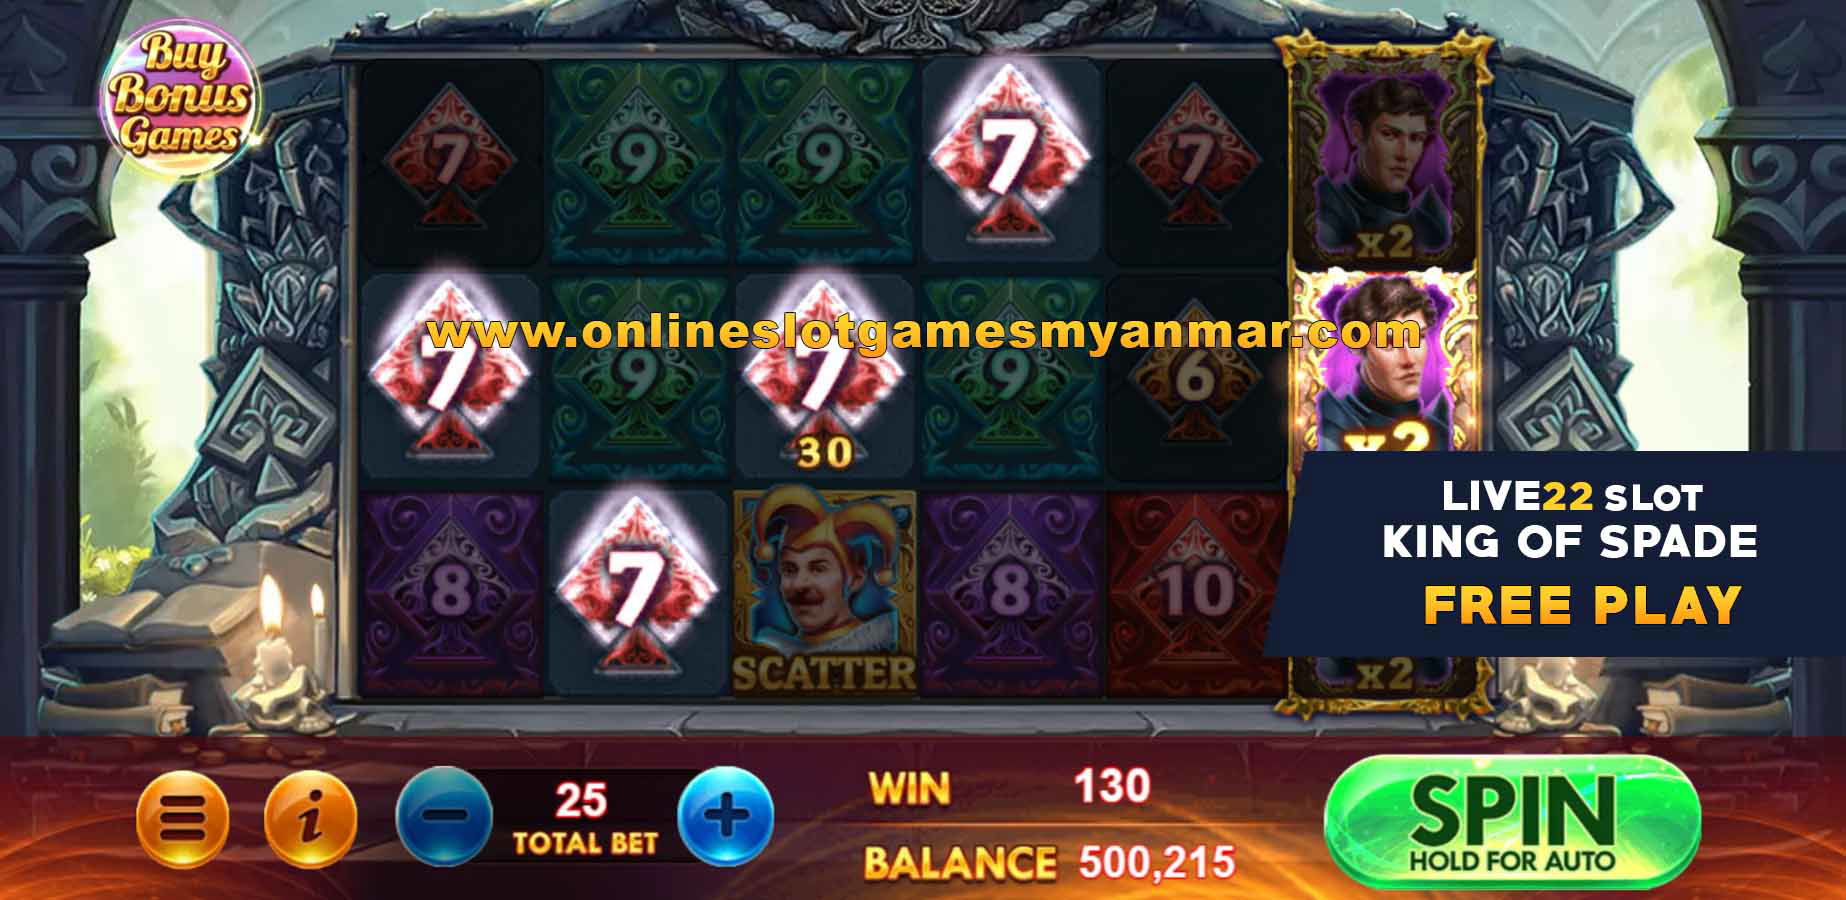 Free Play 5 KING OF SPADE Slot Game - Live22 Myanmar 